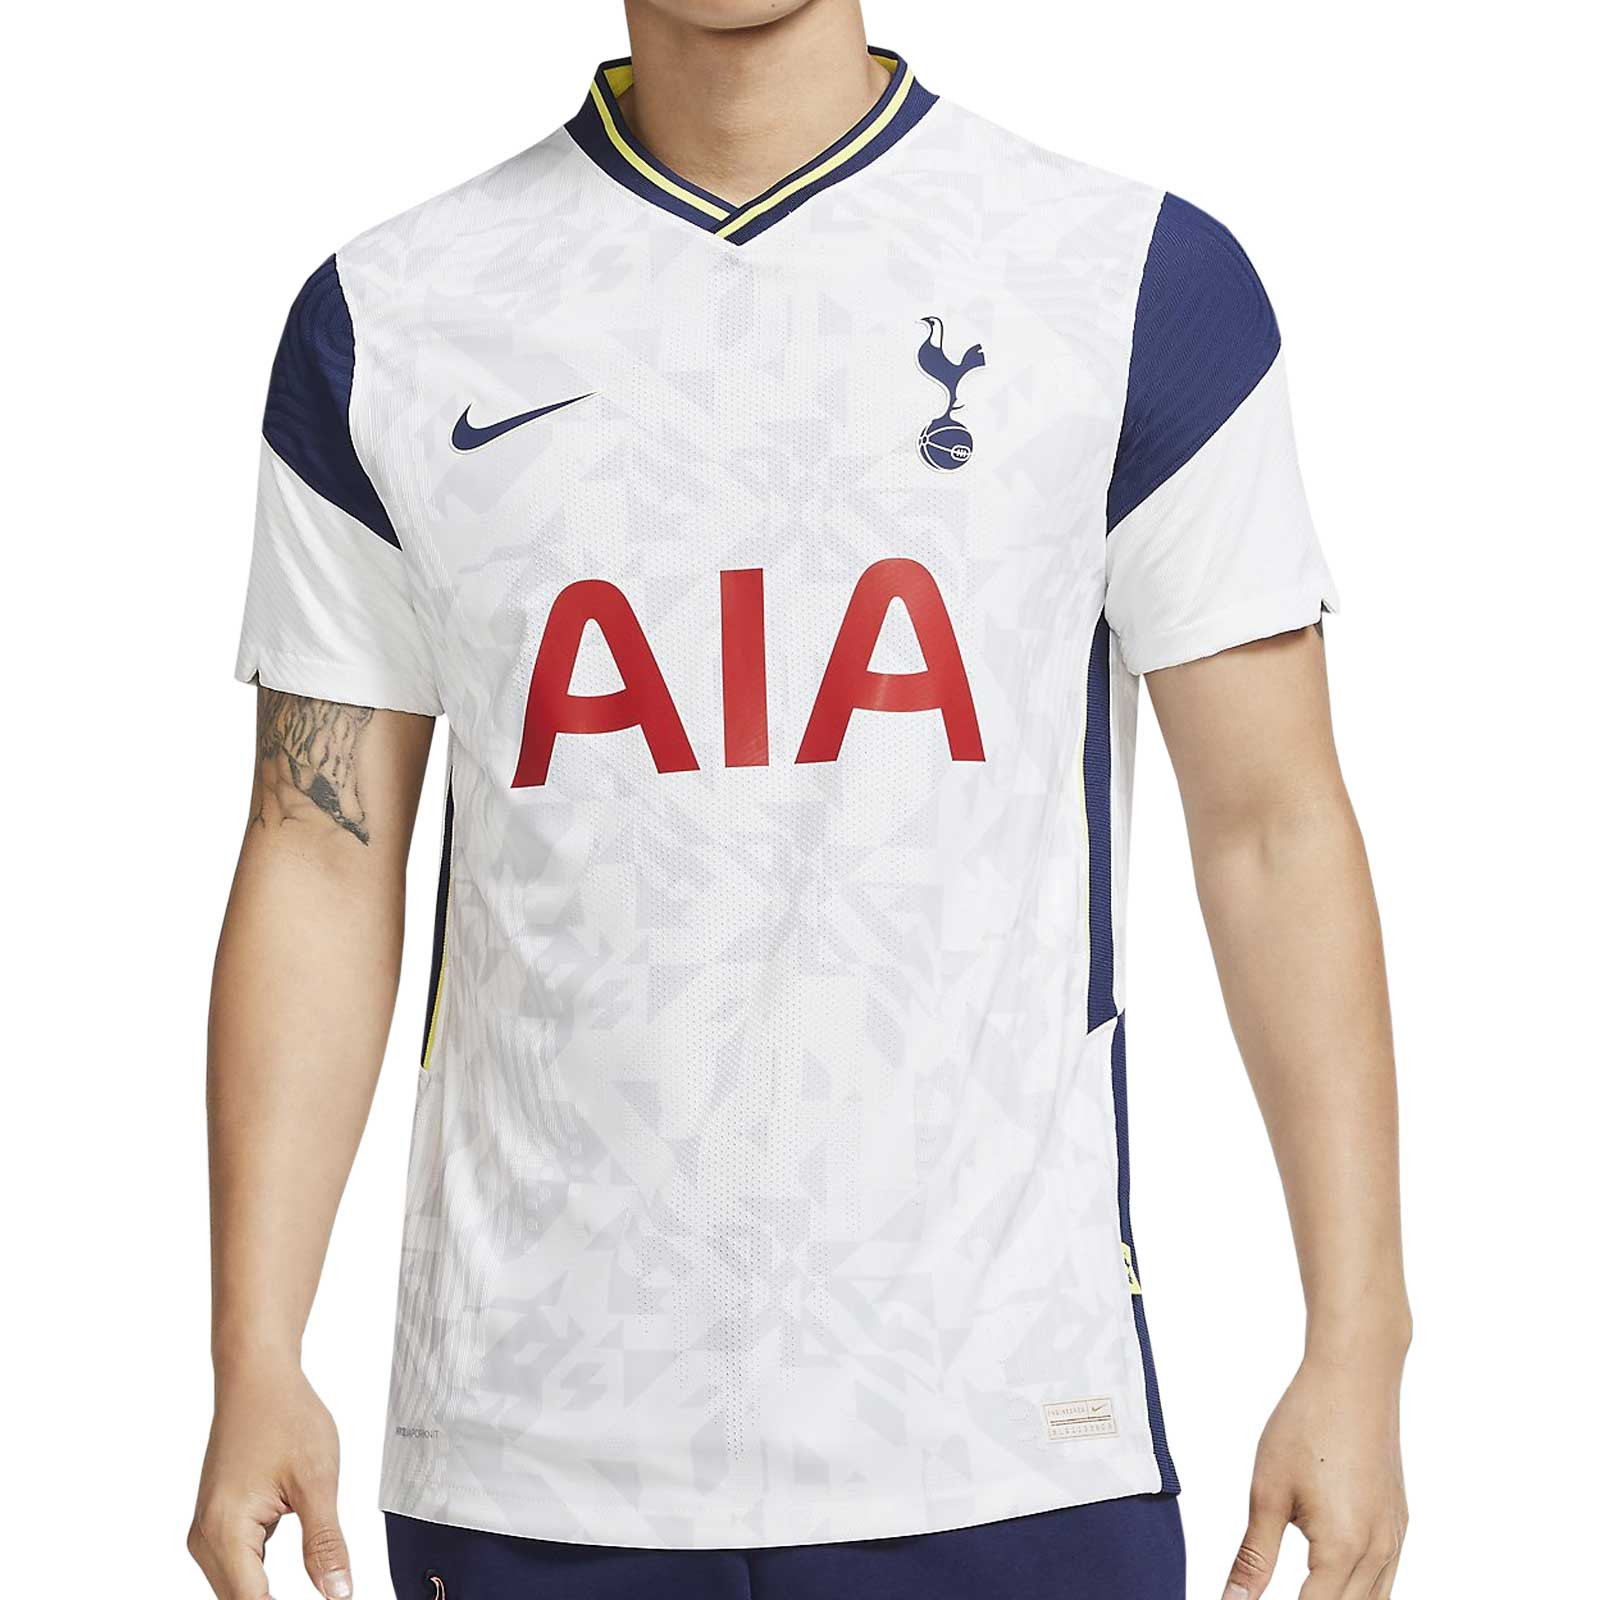 Negligencia Corta vida Optimismo Camiseta Nike Tottenham 2020 2021 Vapor Match | futbolmania